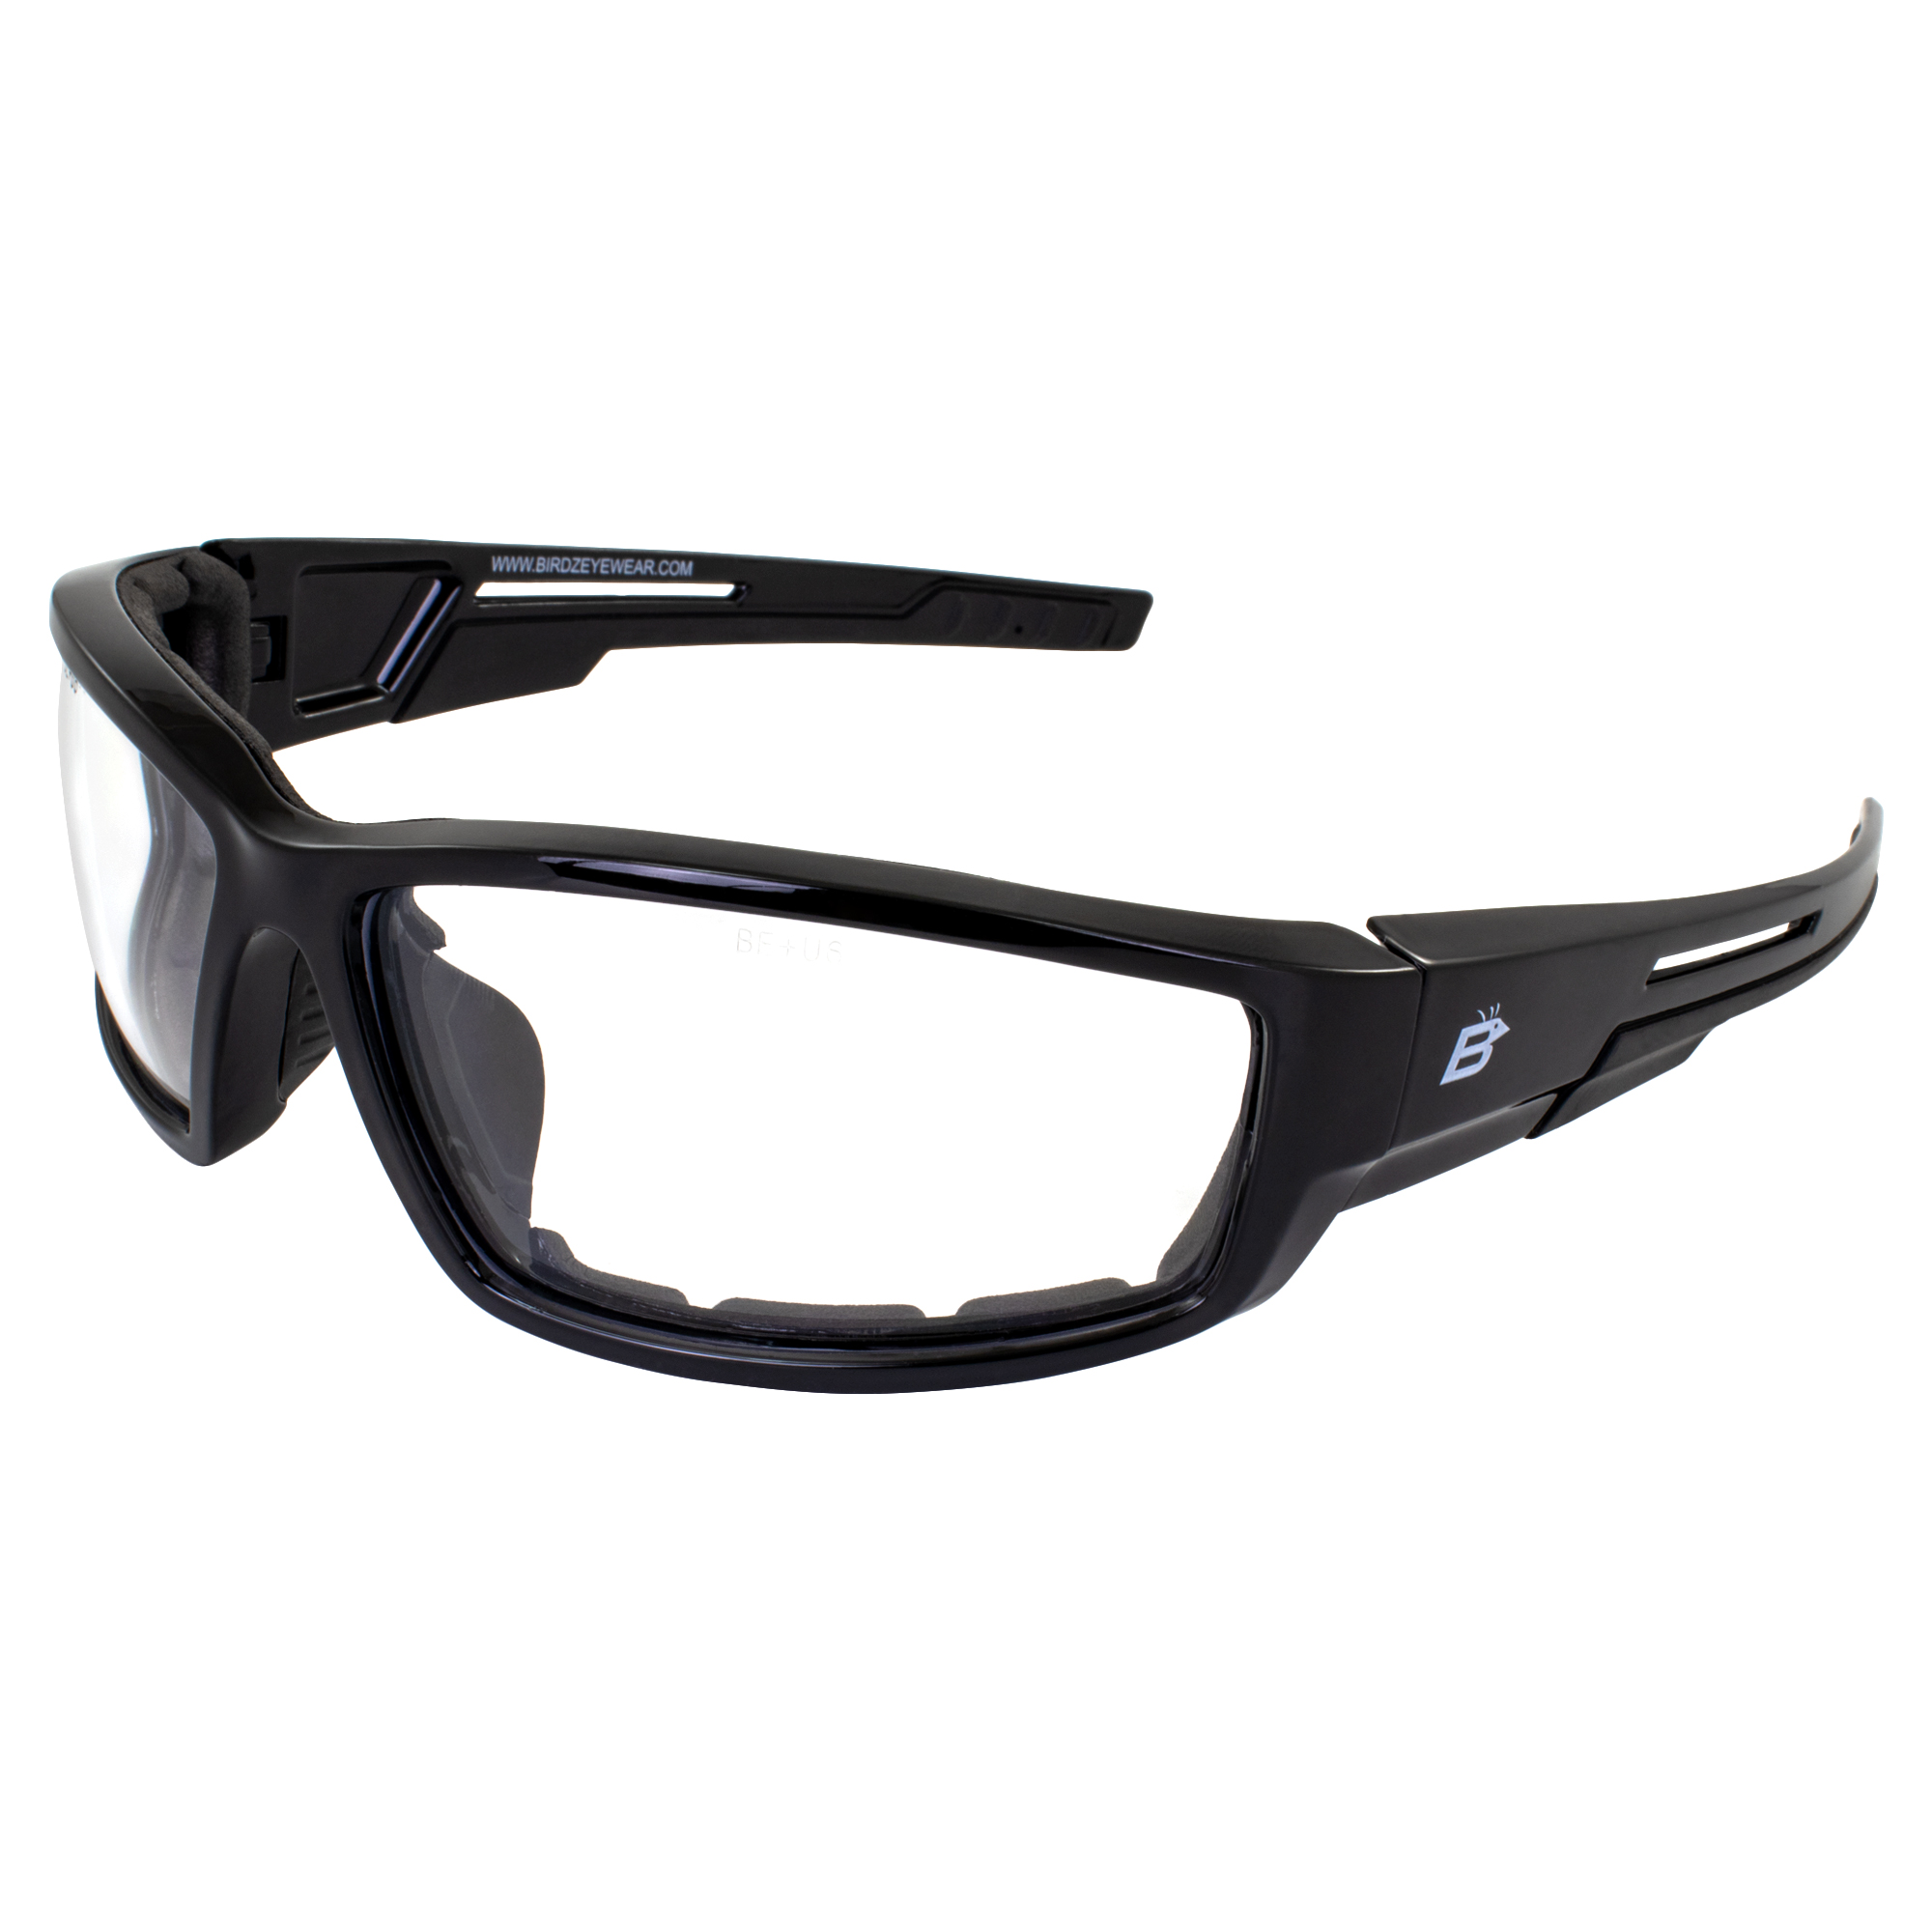 Birdz Eyewear Swoop Anti-Fog Padded Motorcycle Riding Sunglasses Black Frame Lenses for Day & Night ANSI Z87 .1 - image 3 of 7